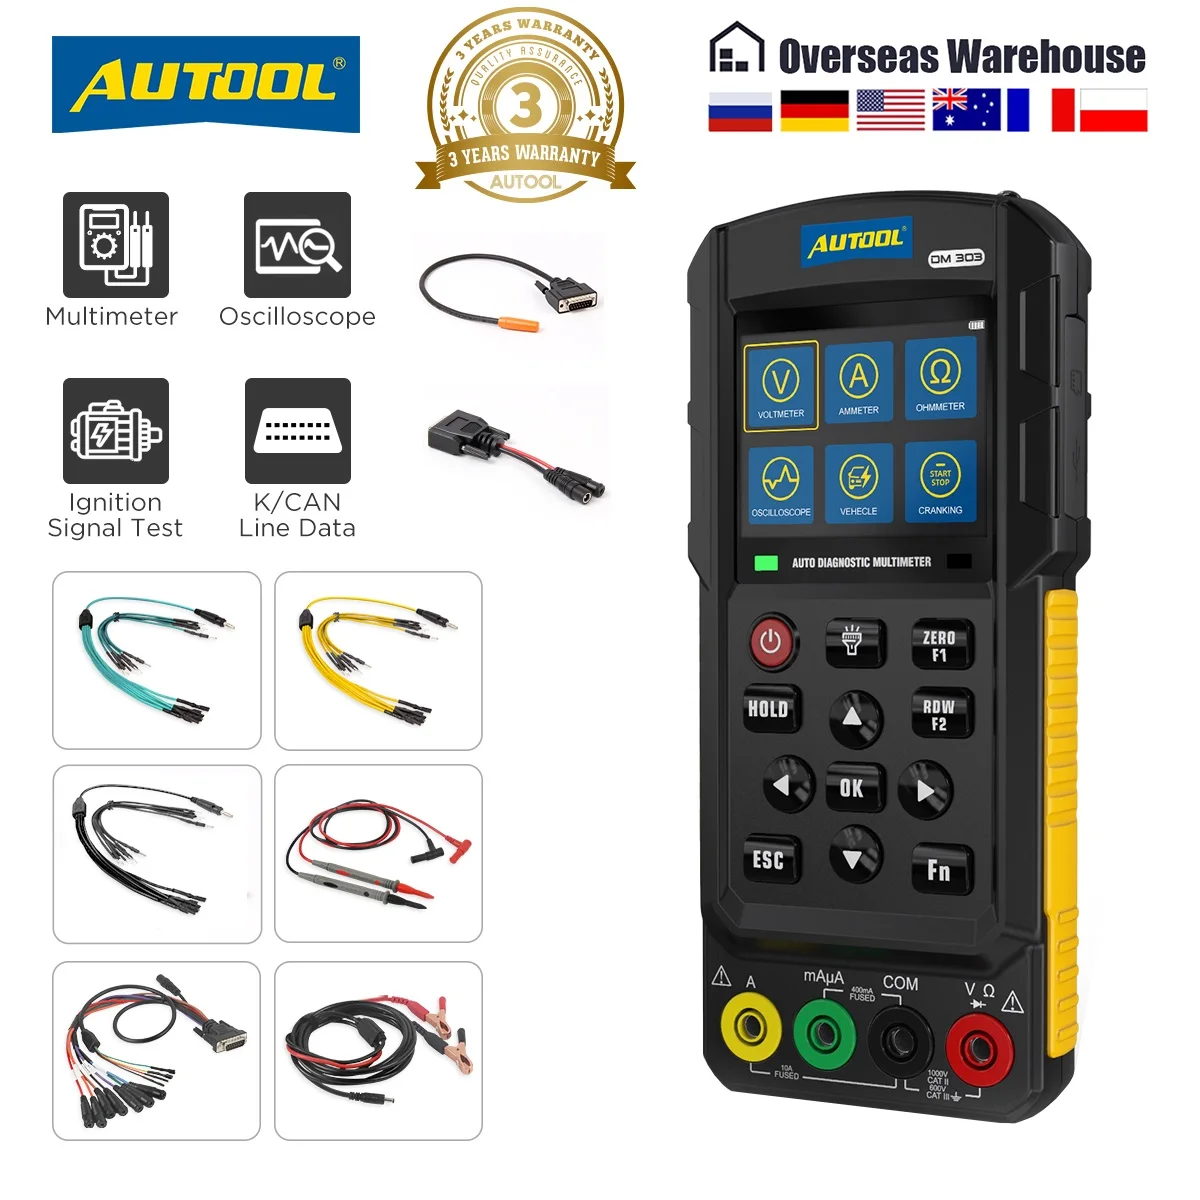 AUTOOL DM303 Auto Diagnostic Multimeter Car Circuit Tester w